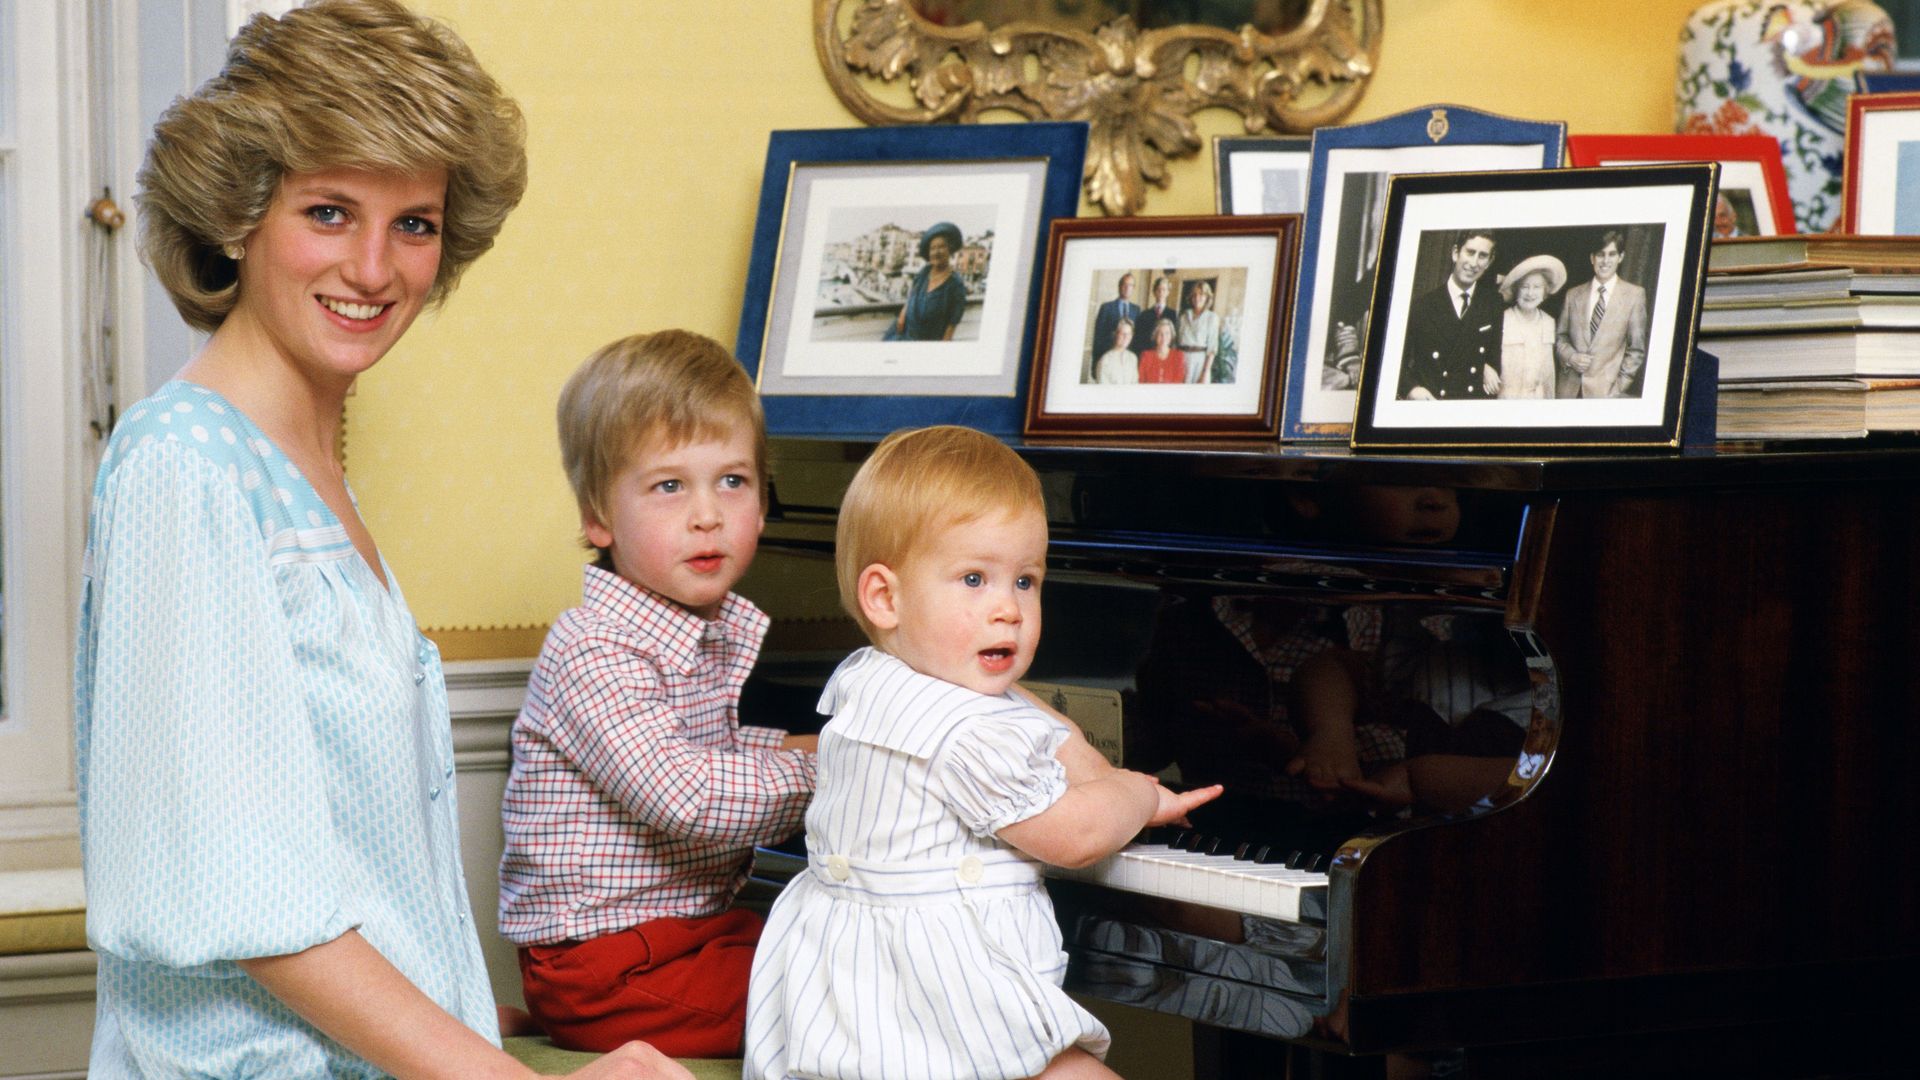 Princess Diana behind Prince William and Prince Harry at a piano